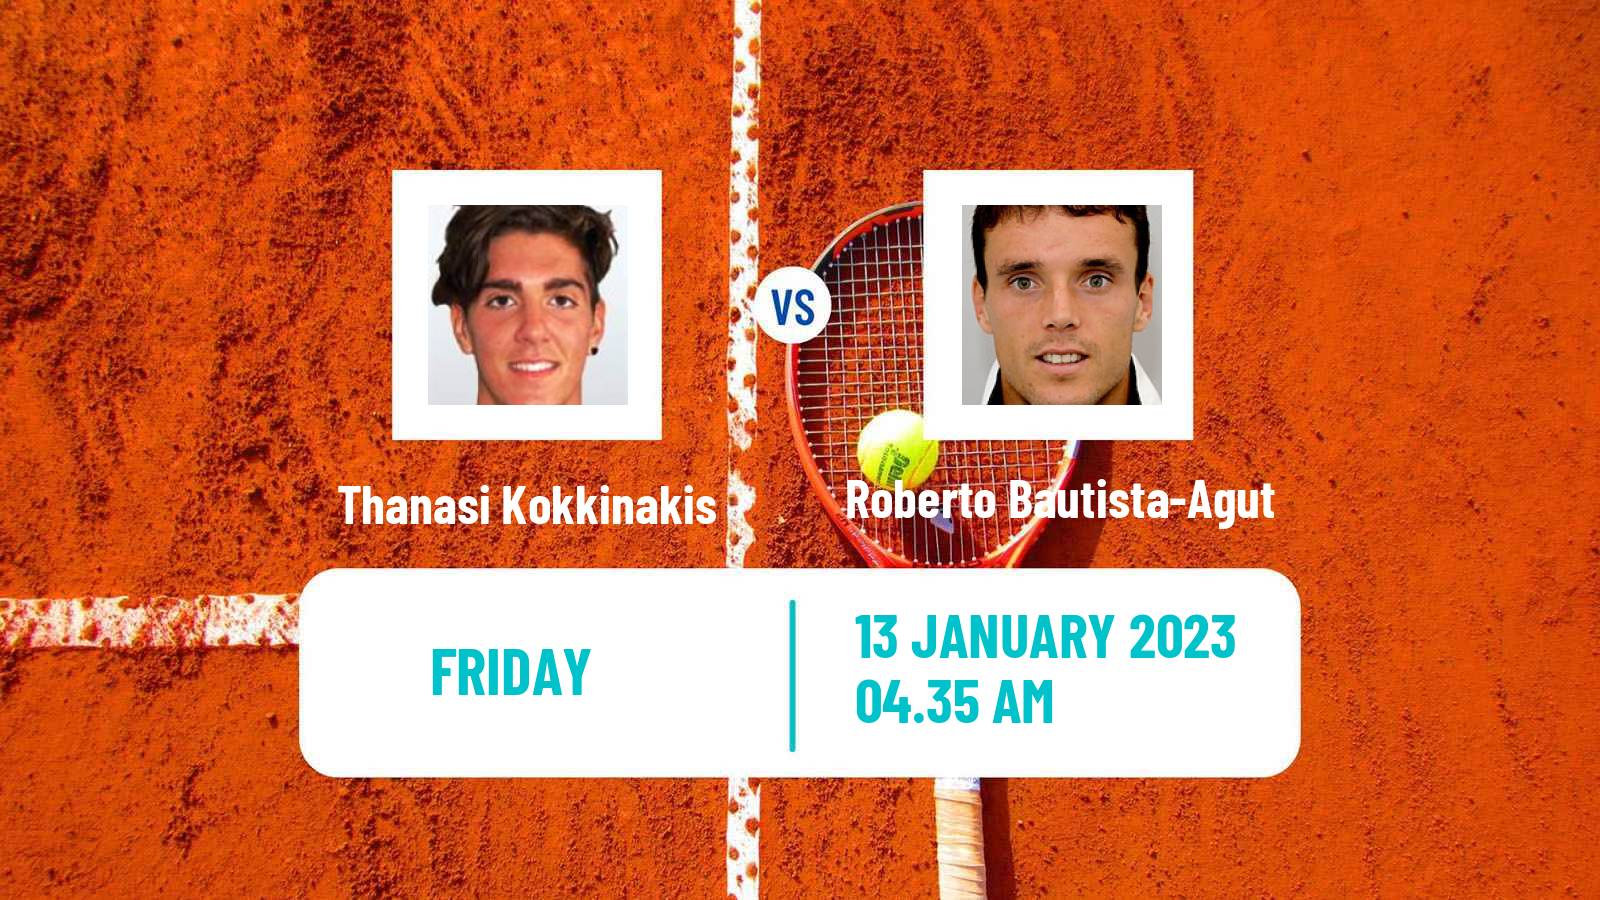 Tennis ATP Adelaide 2 Thanasi Kokkinakis - Roberto Bautista-Agut